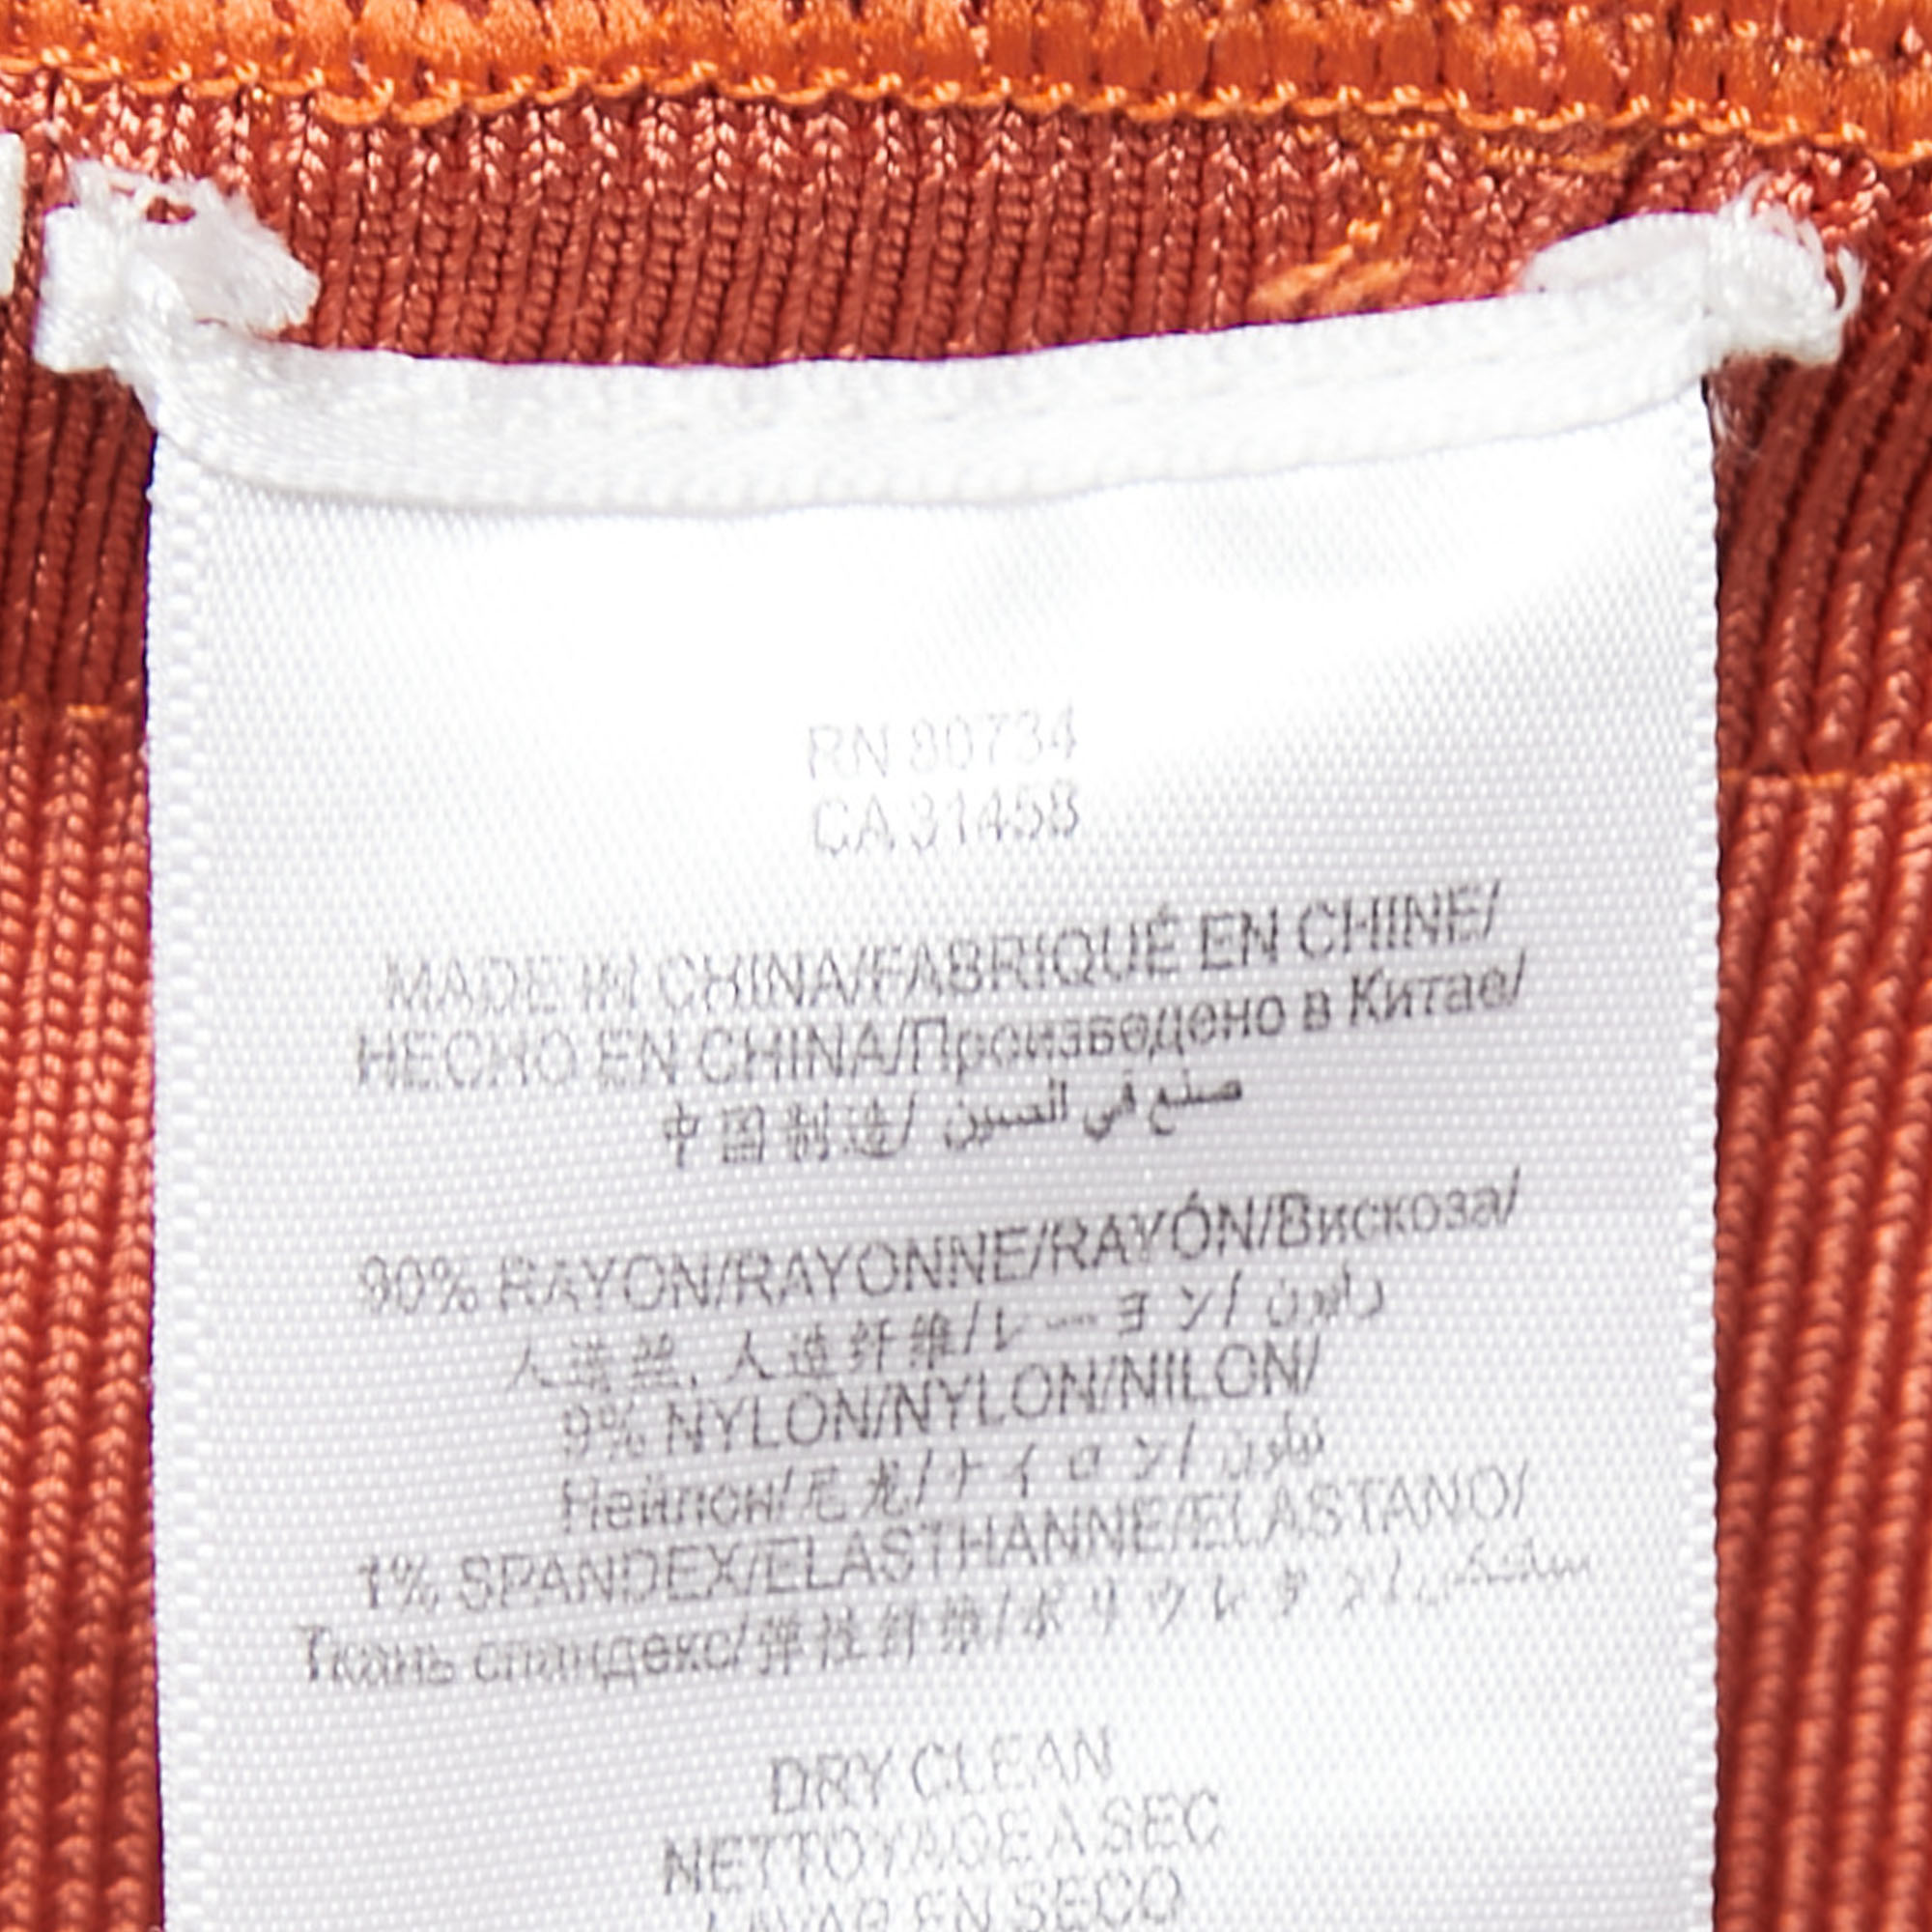 Herve Leger Orange Knit Bandage Short Dress XS